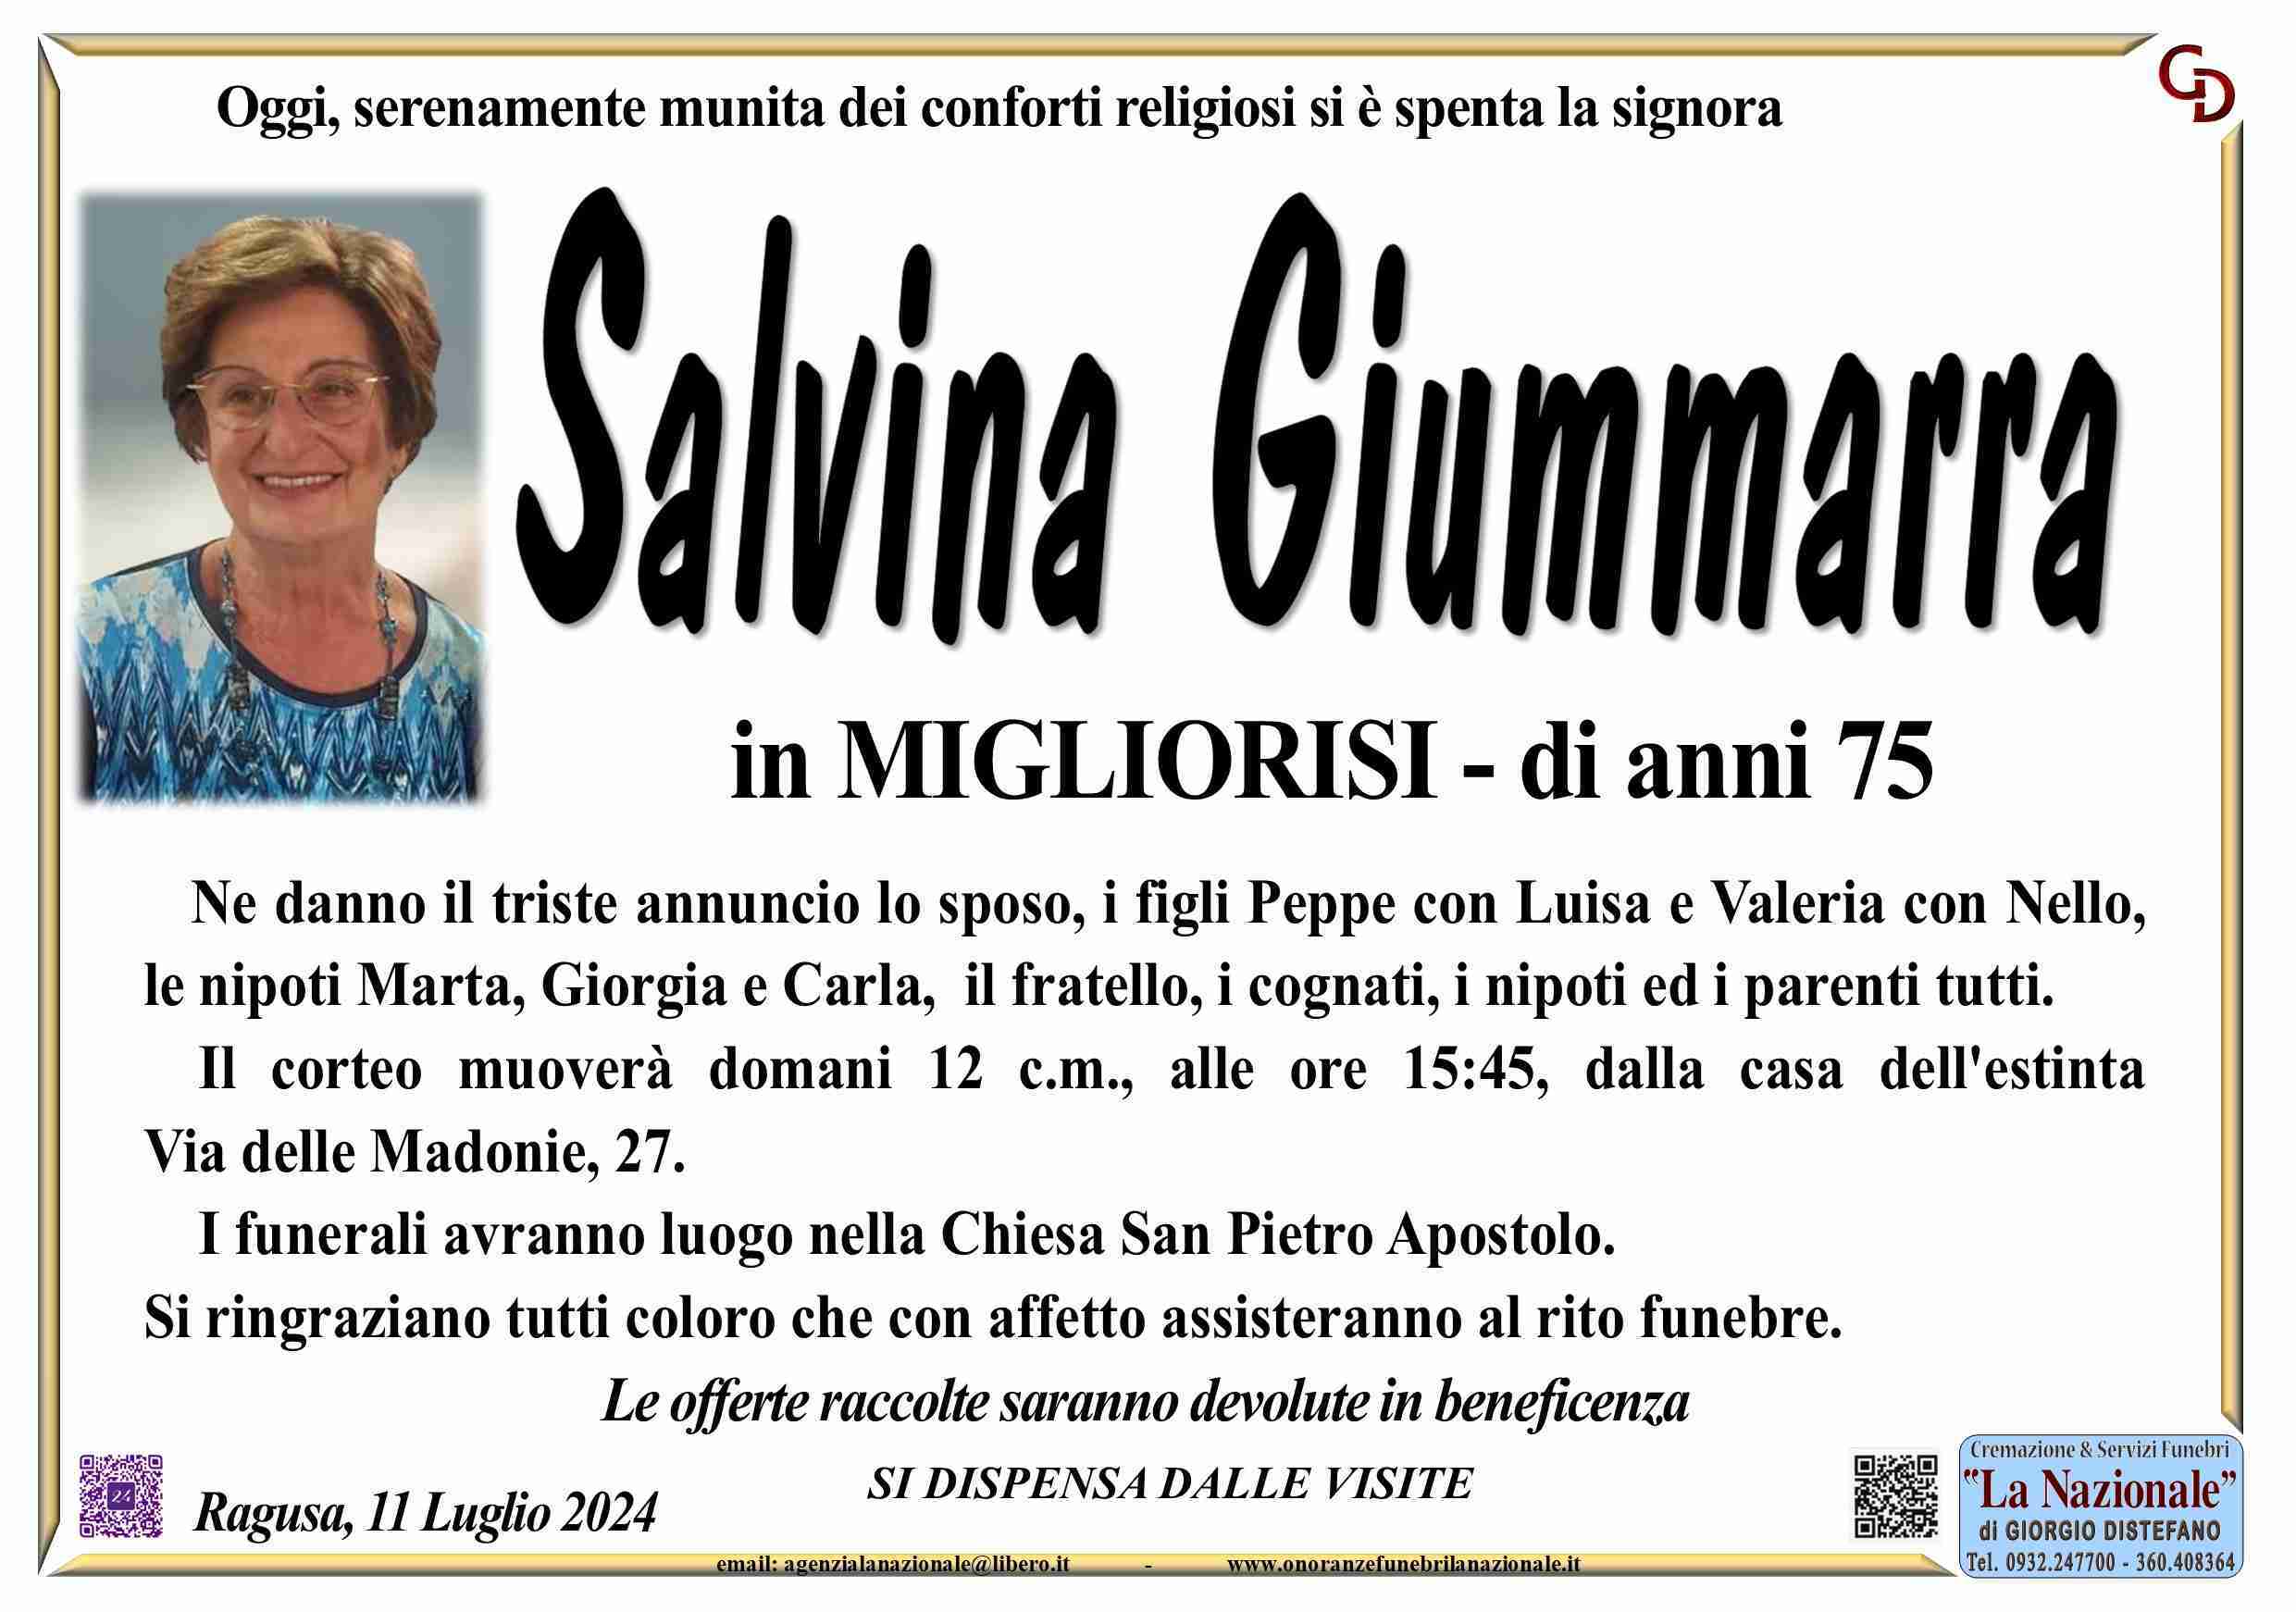 Salvina Giummarra